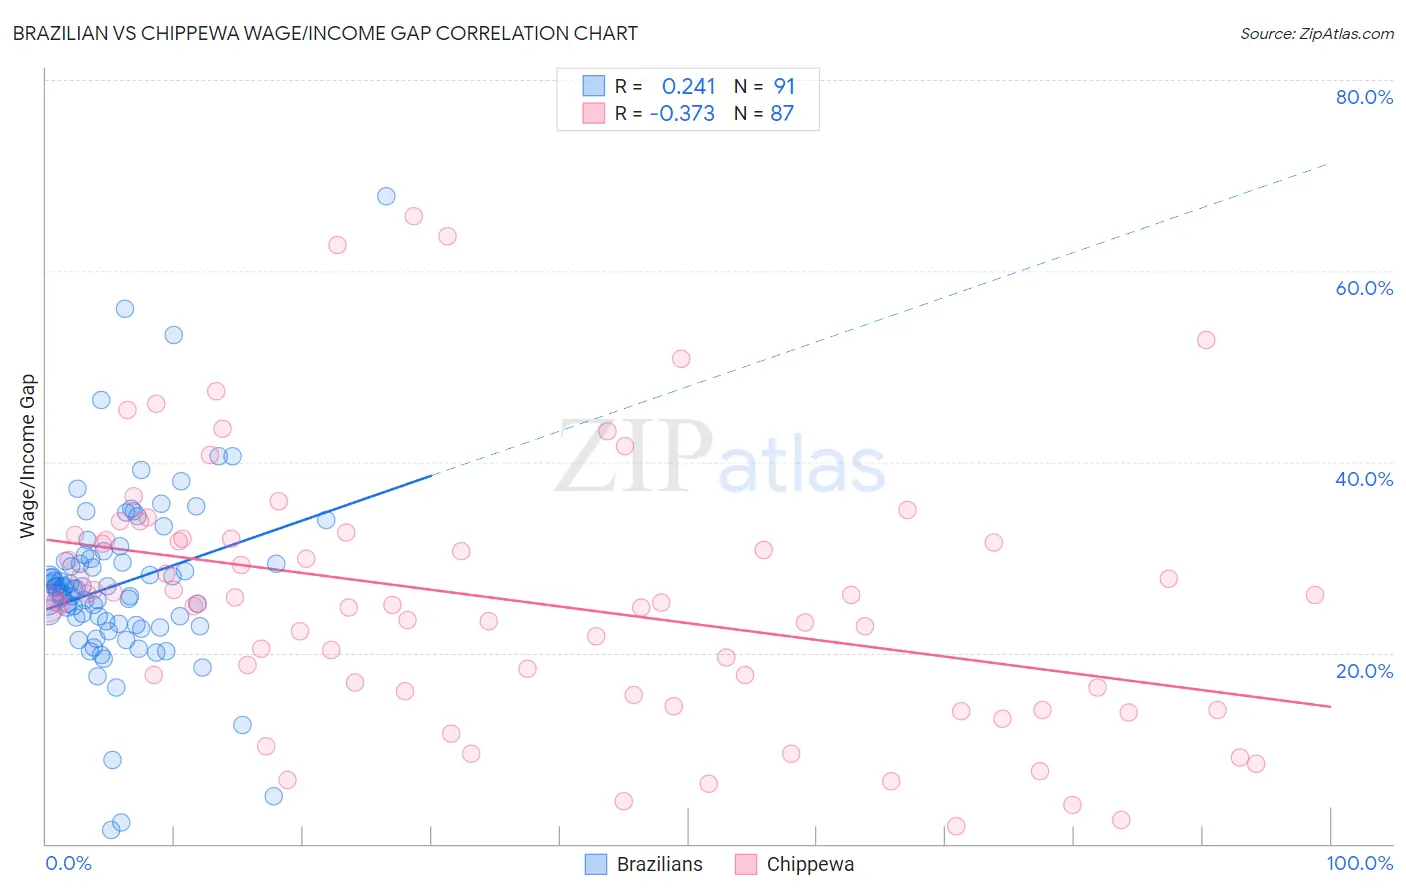 Brazilian vs Chippewa Wage/Income Gap